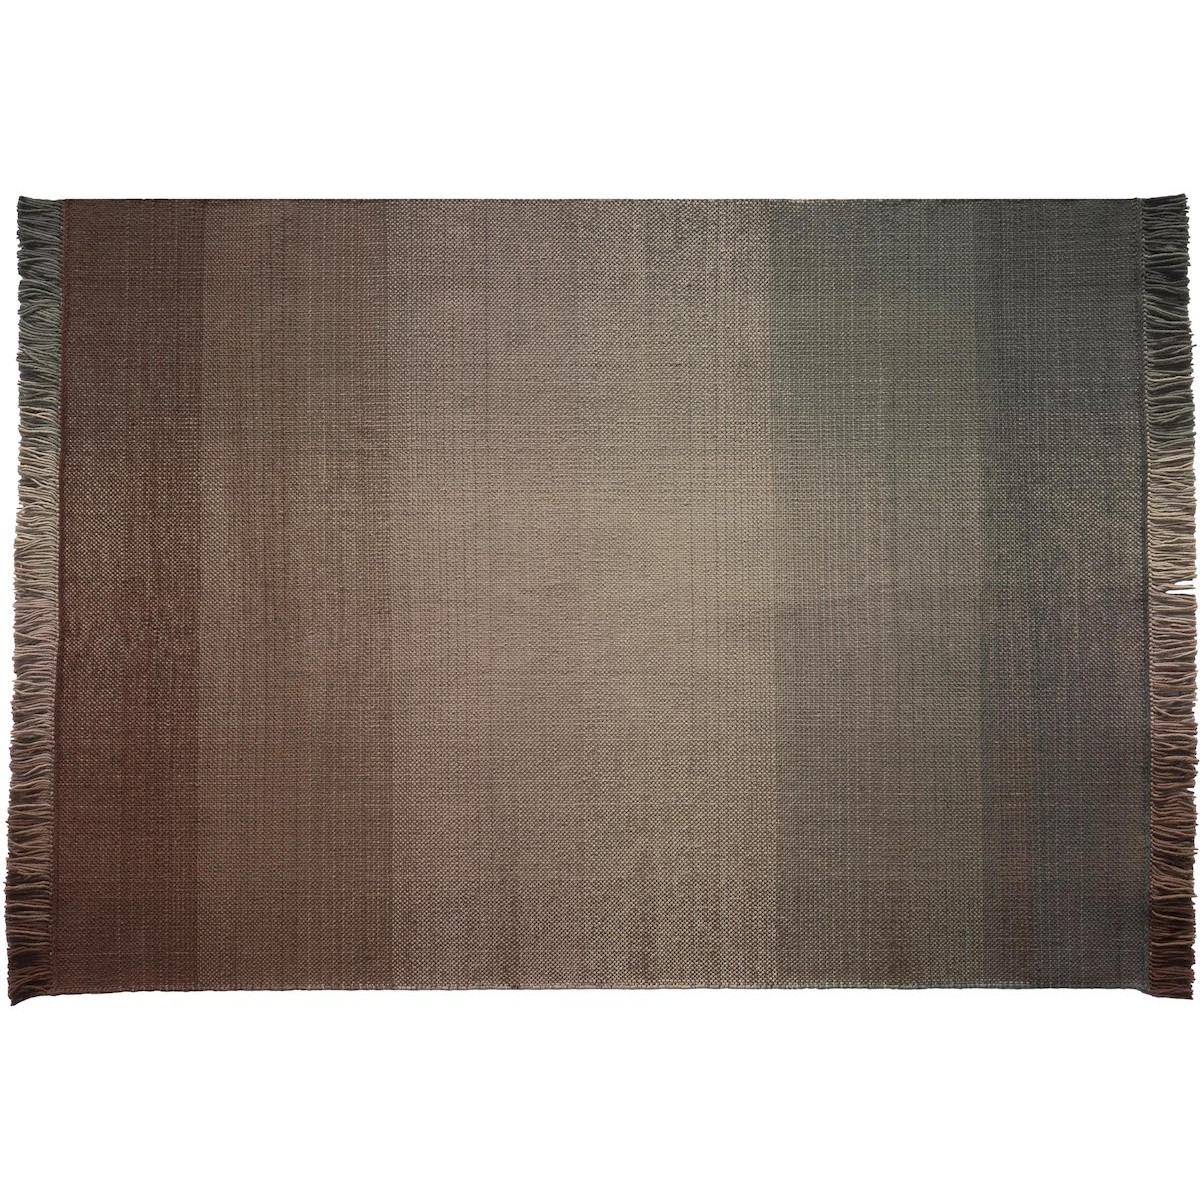 250x350cm - Palette 4 - polyethylene Shade rug